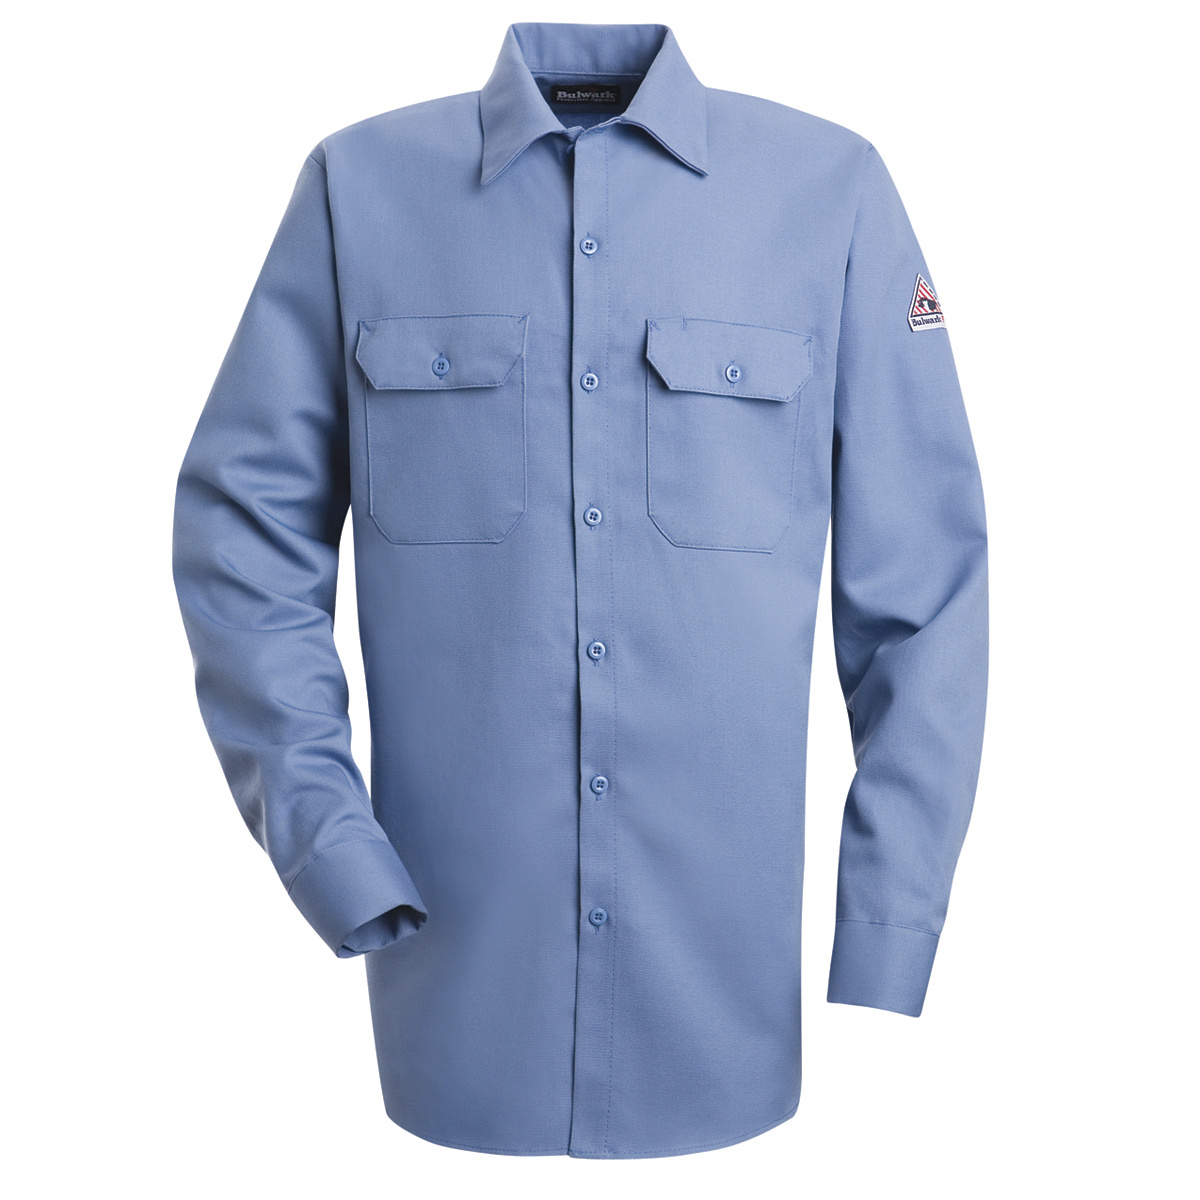 Bulwark® Large Regular Light Blue Westex Ultrasoft®/Cotton/Nylon Flame Resistant Work Shirt With Button Front Closure